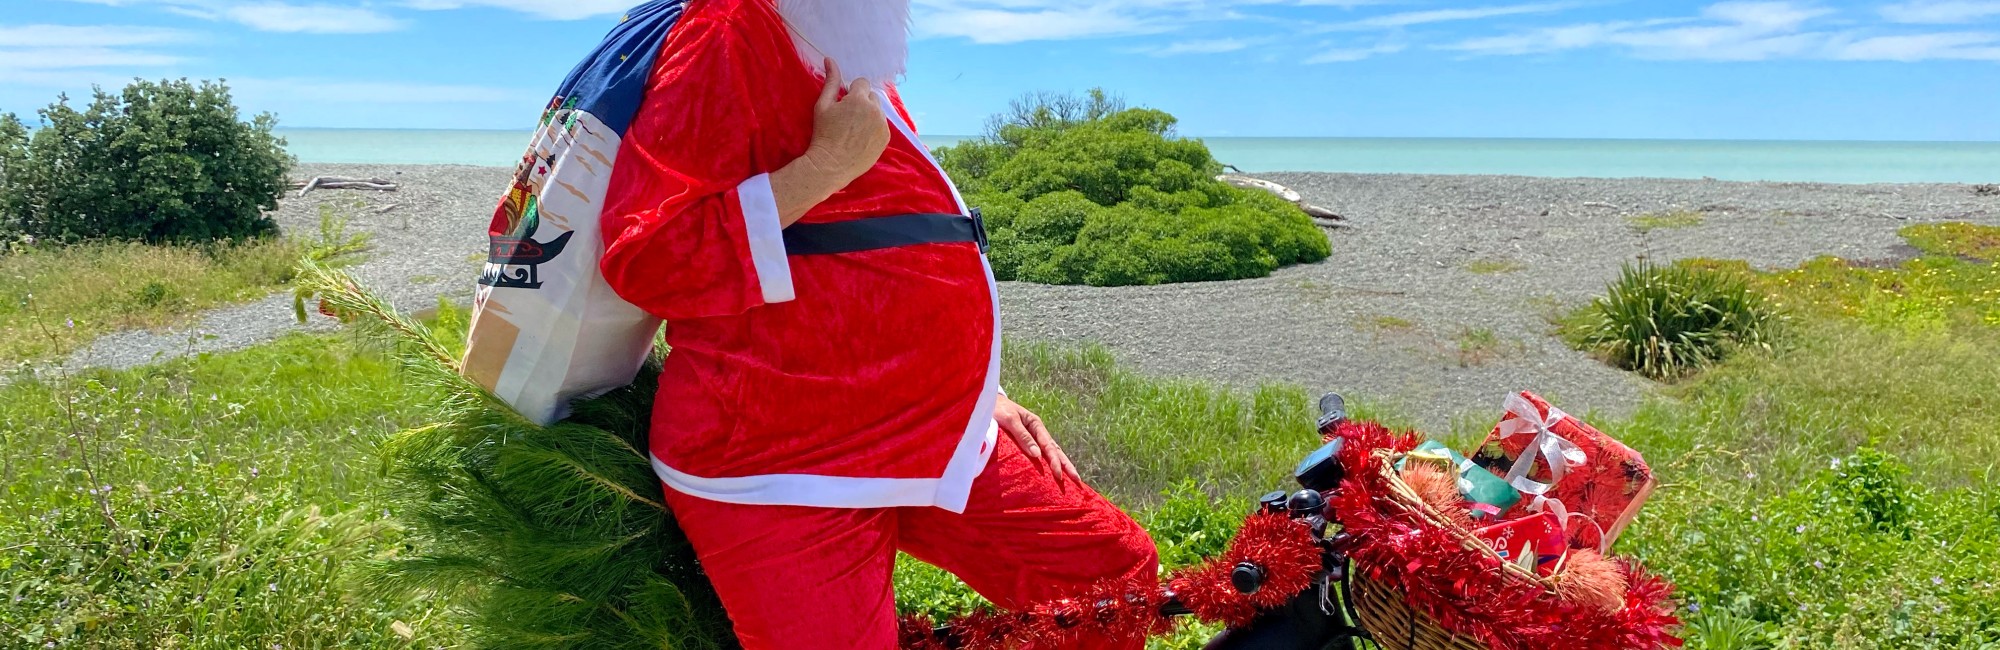 Santa on Hawkes Bay Trails image 1 credit Charlie Hollings HattonHawkes Bay Regional Council